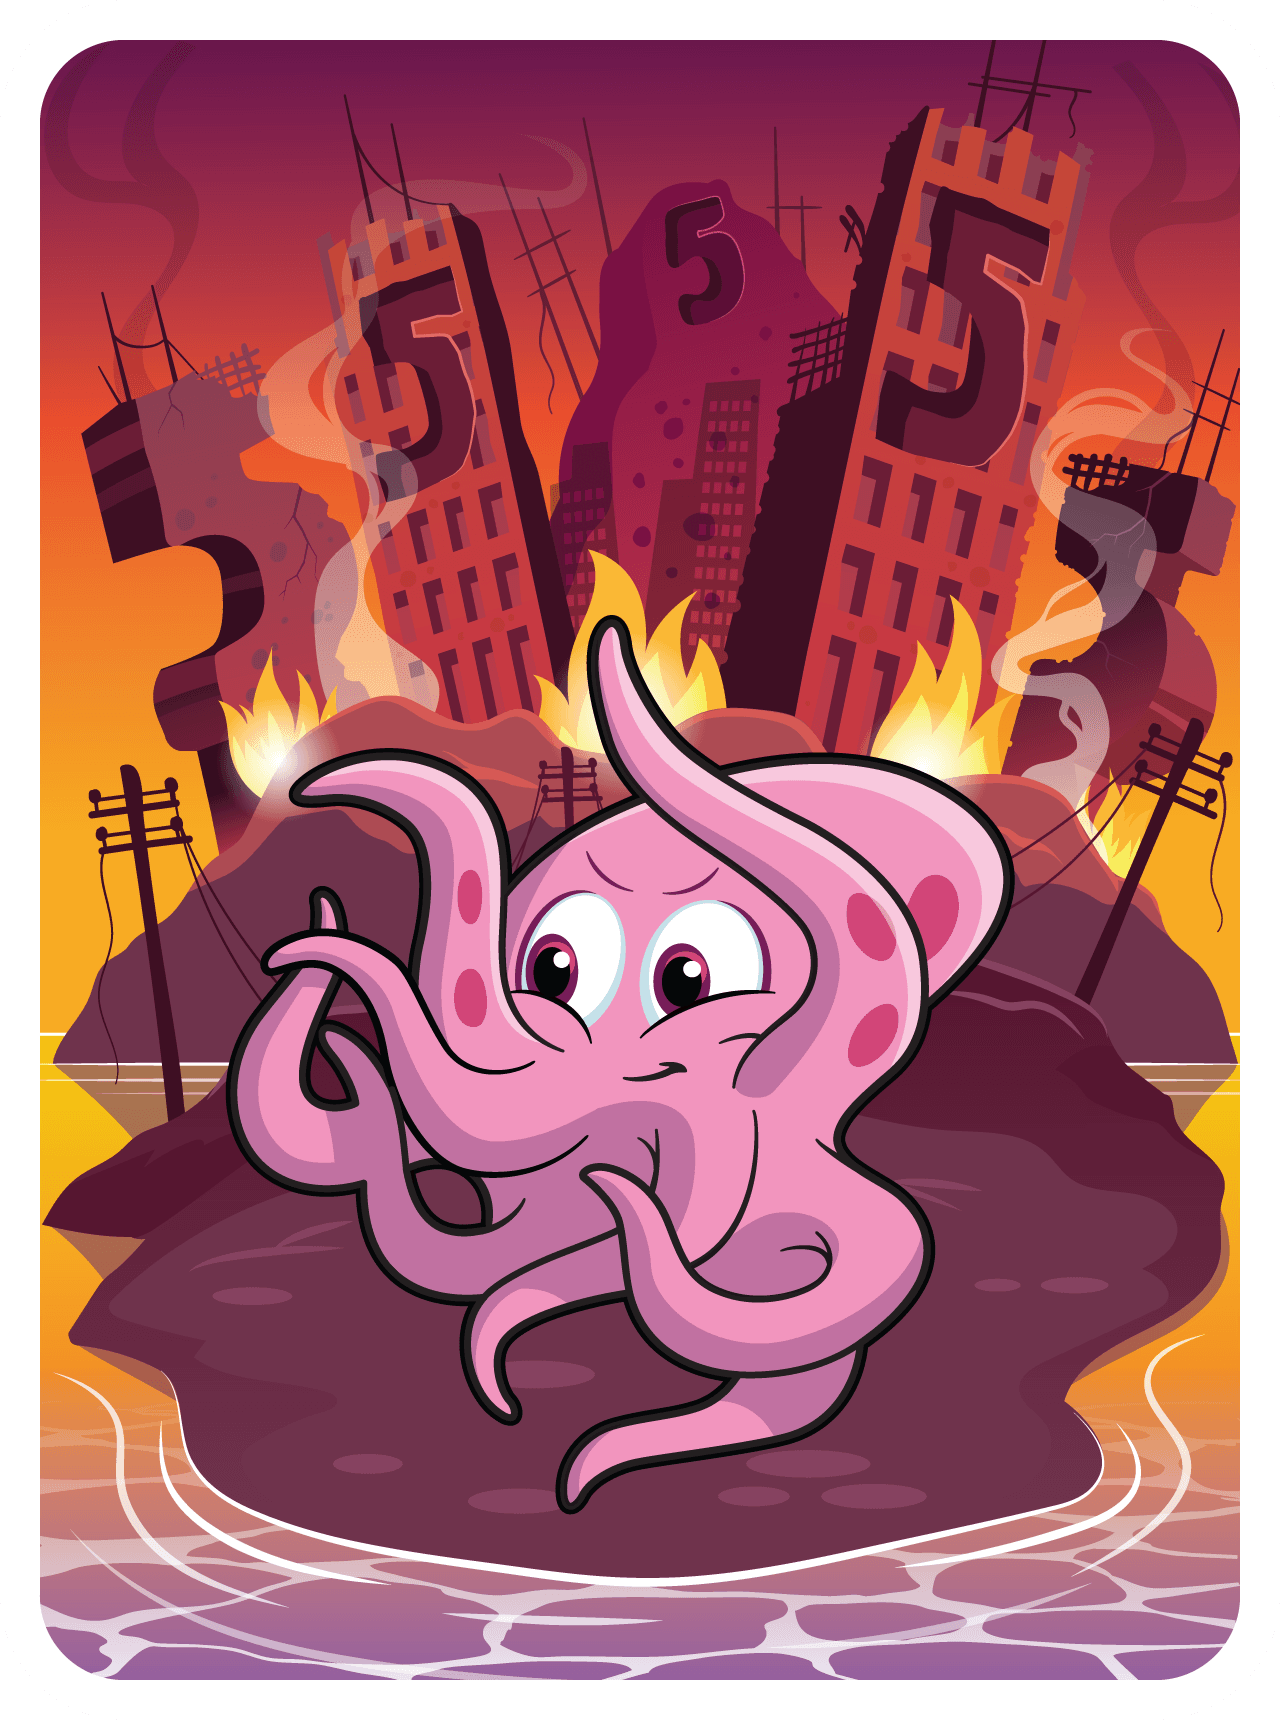 Outgoing Octopus #52712